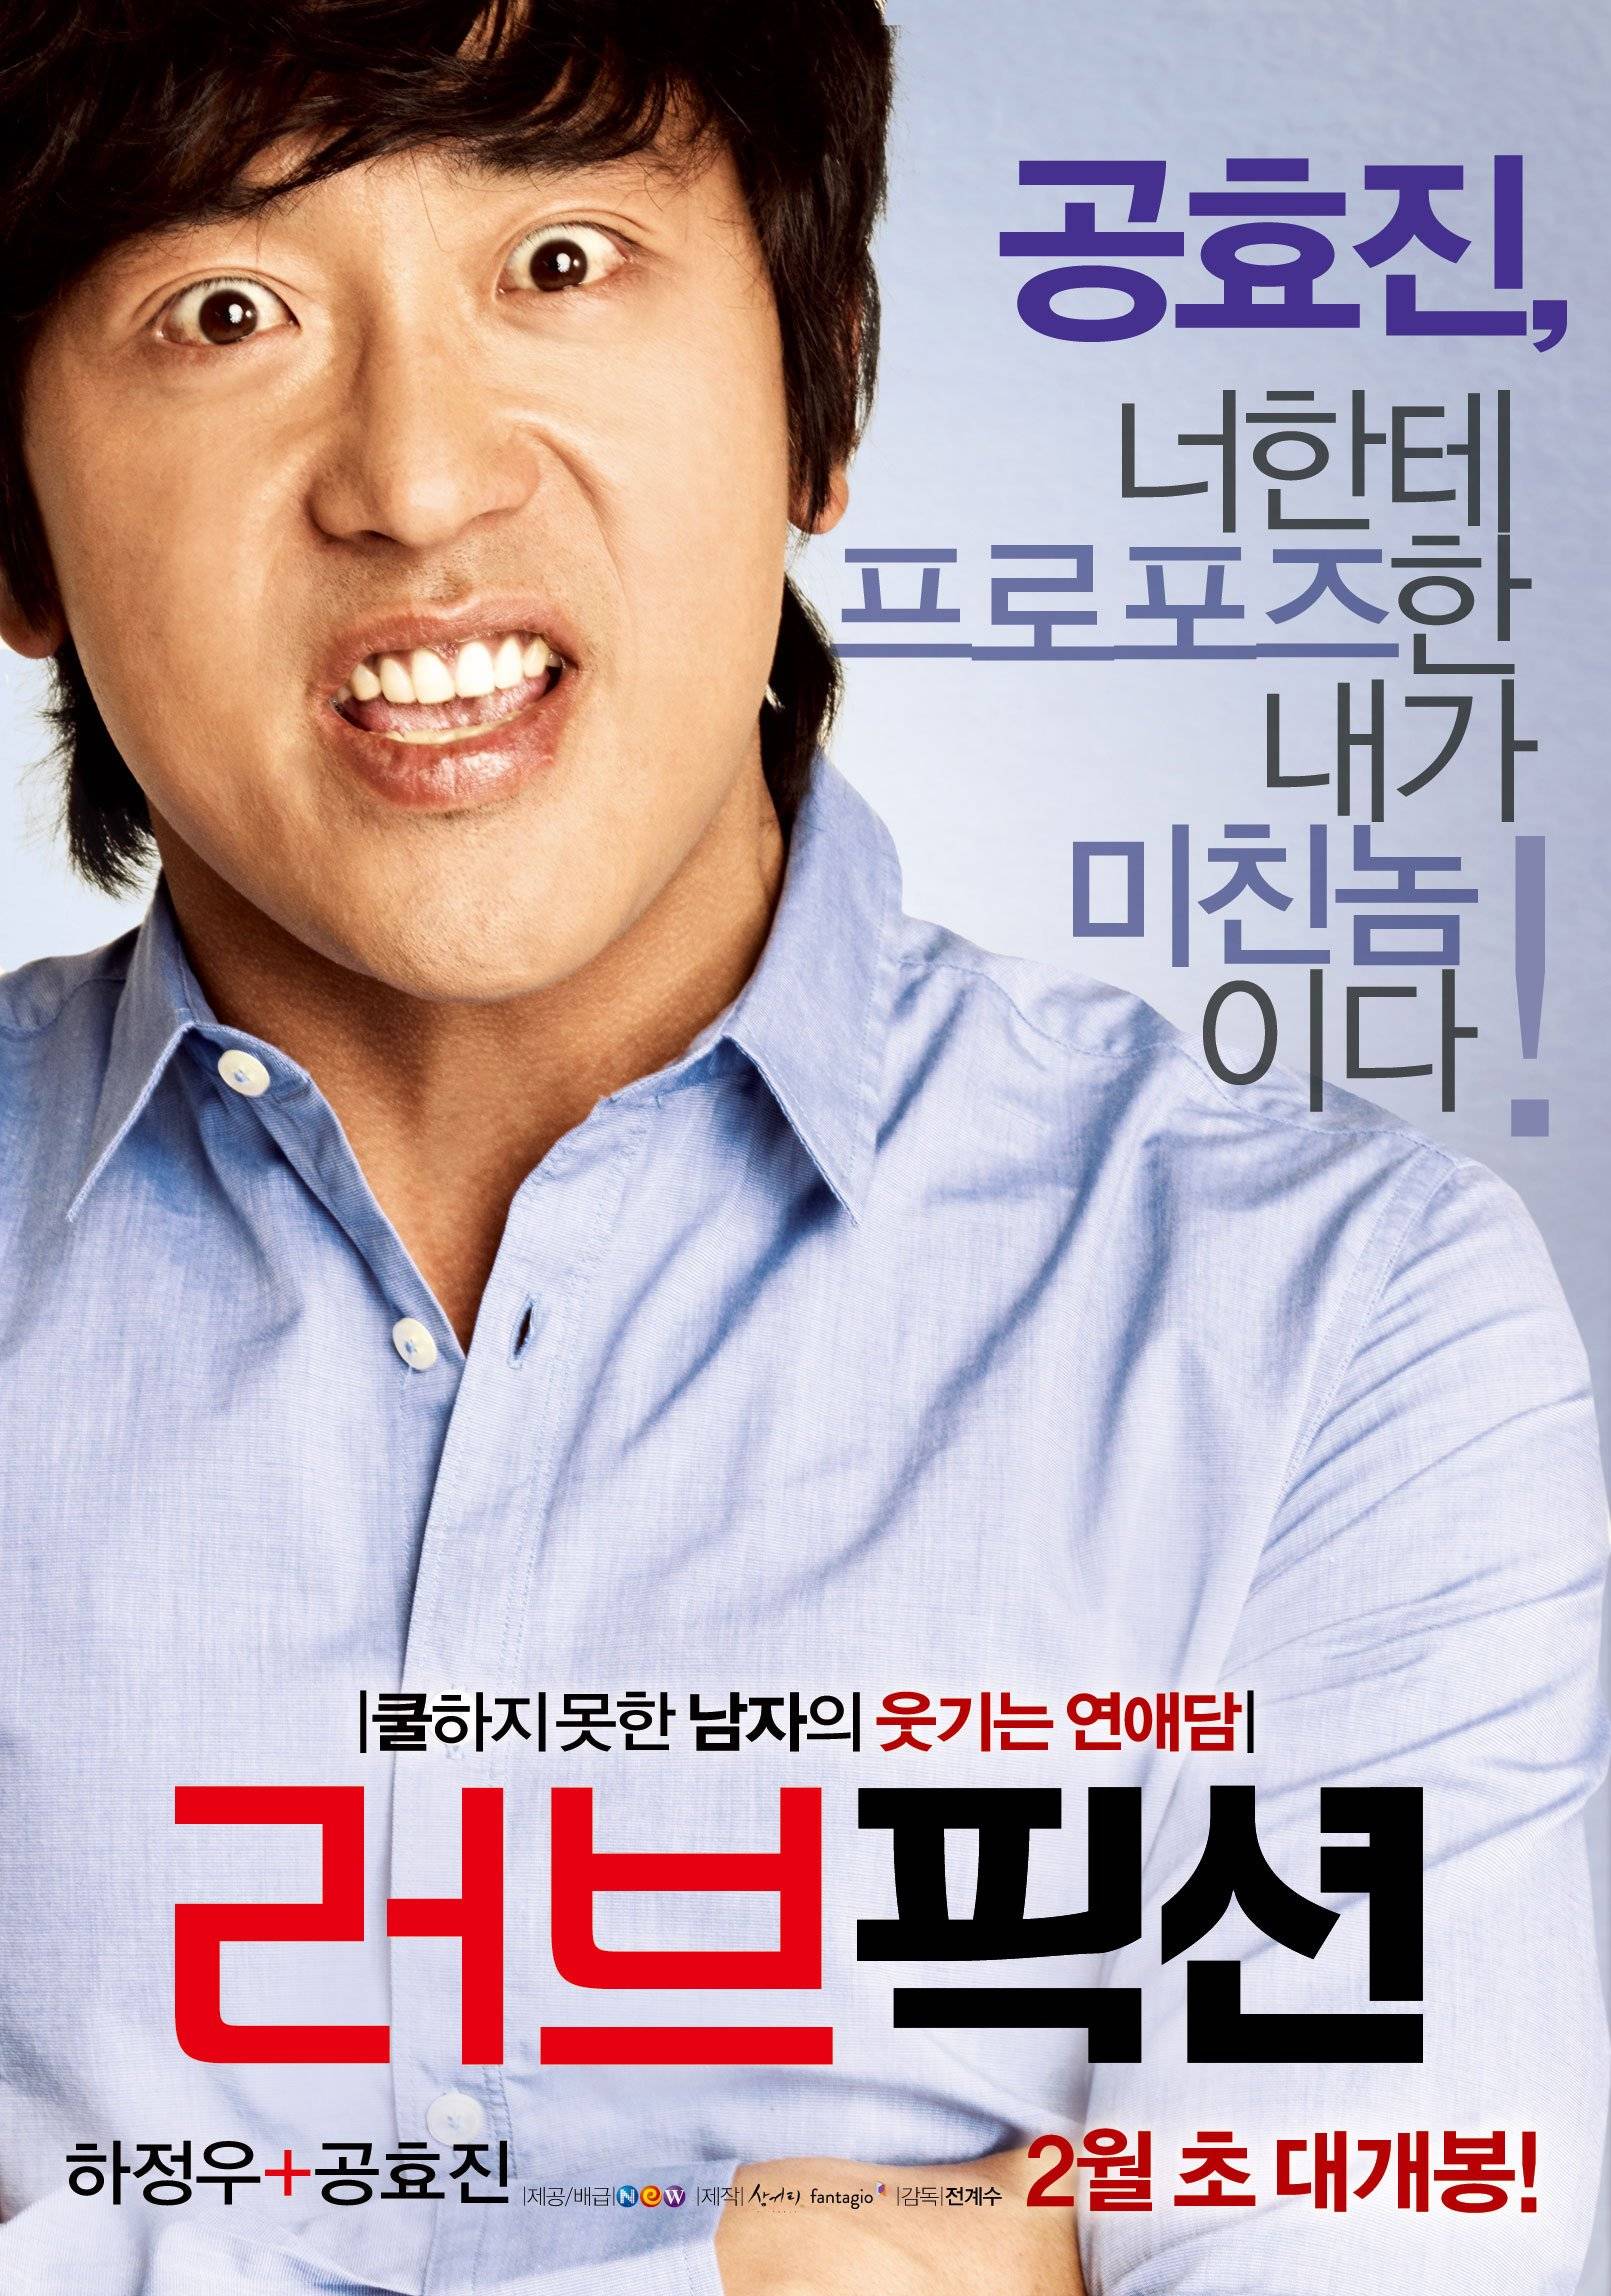 Korean Comedy Romance Movies 2011